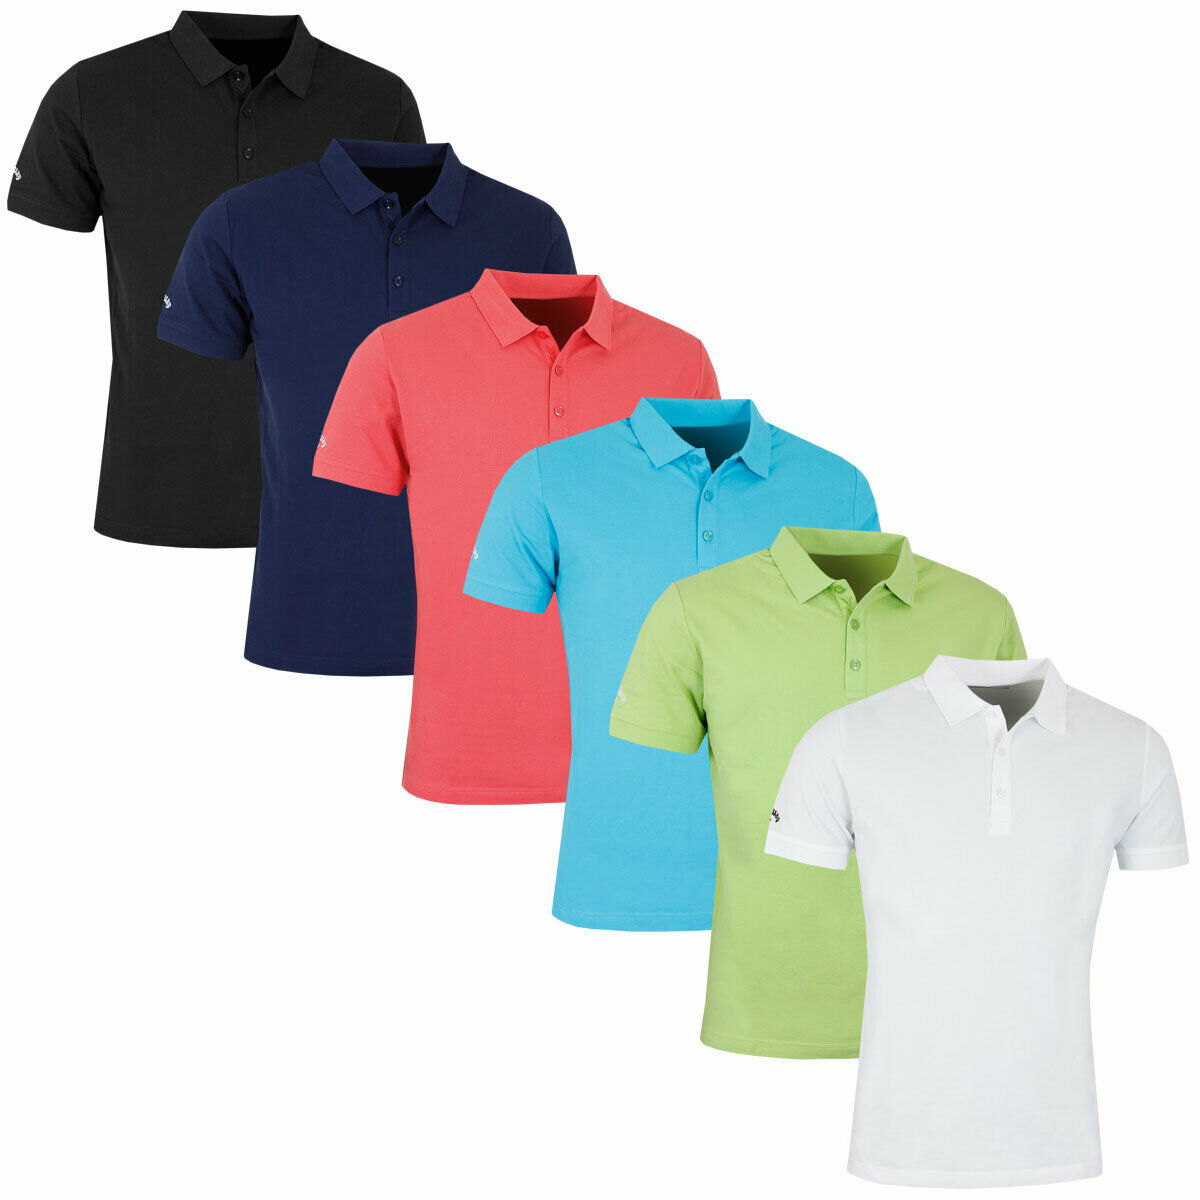 Callaway Golf Mens Cotton Pique Opti-Dri Polo Shirt 49% OFF RRP - Golf ...